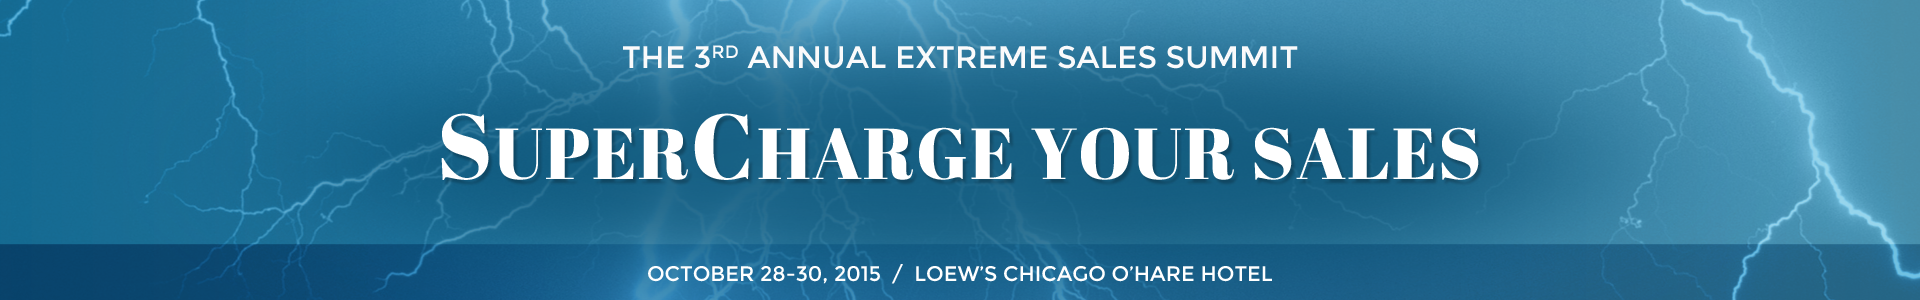 Extreme Sales Summit 2015